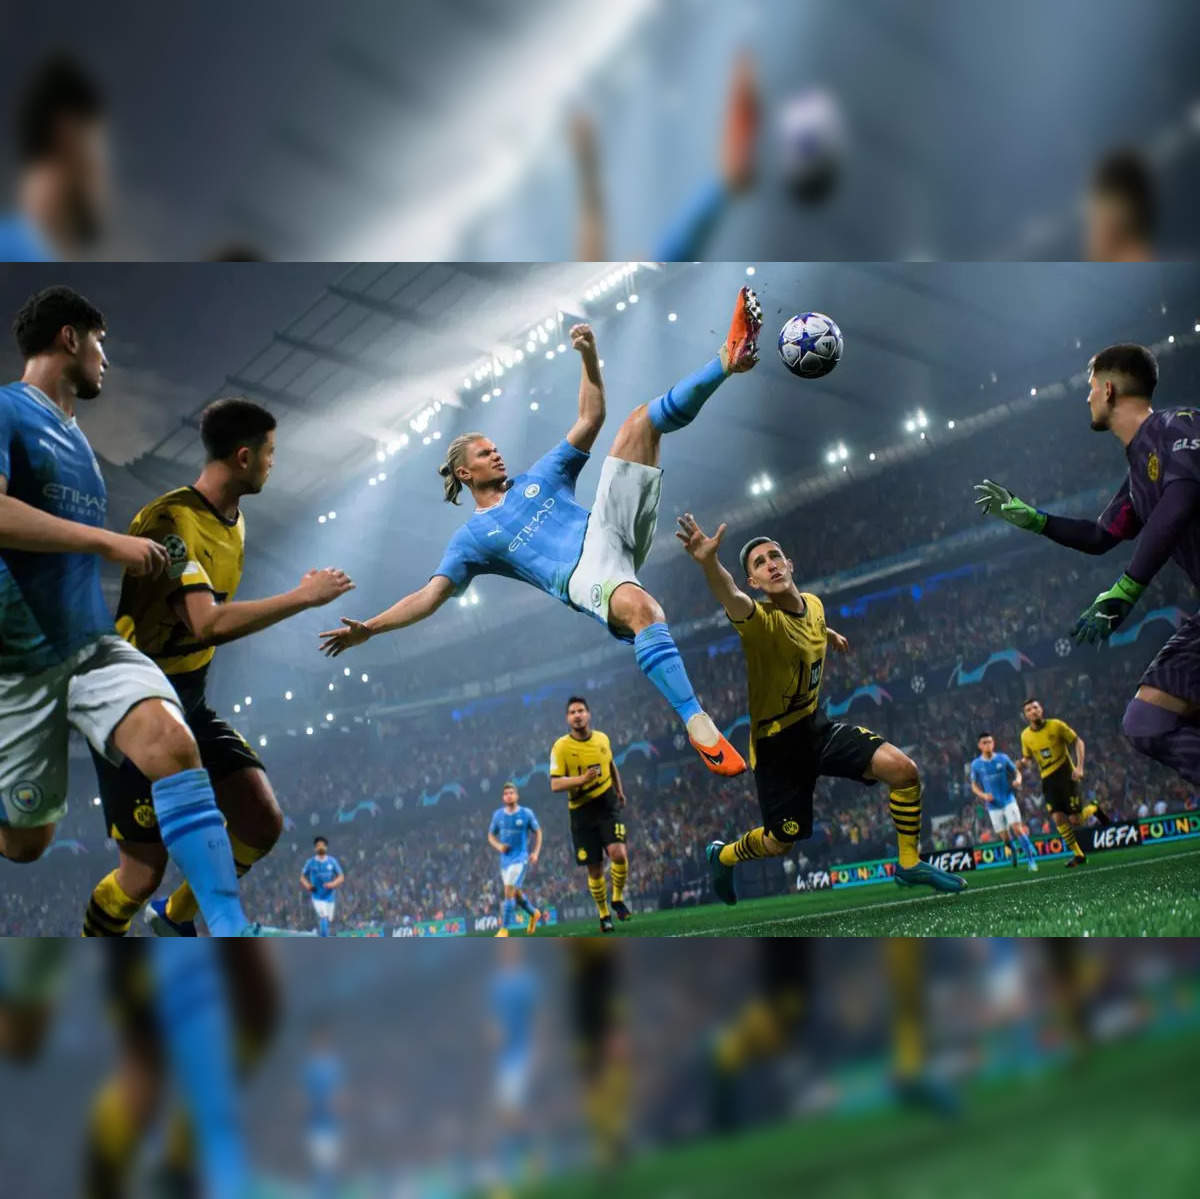 FIFA 18 - Free Download PC Game (Full Version)